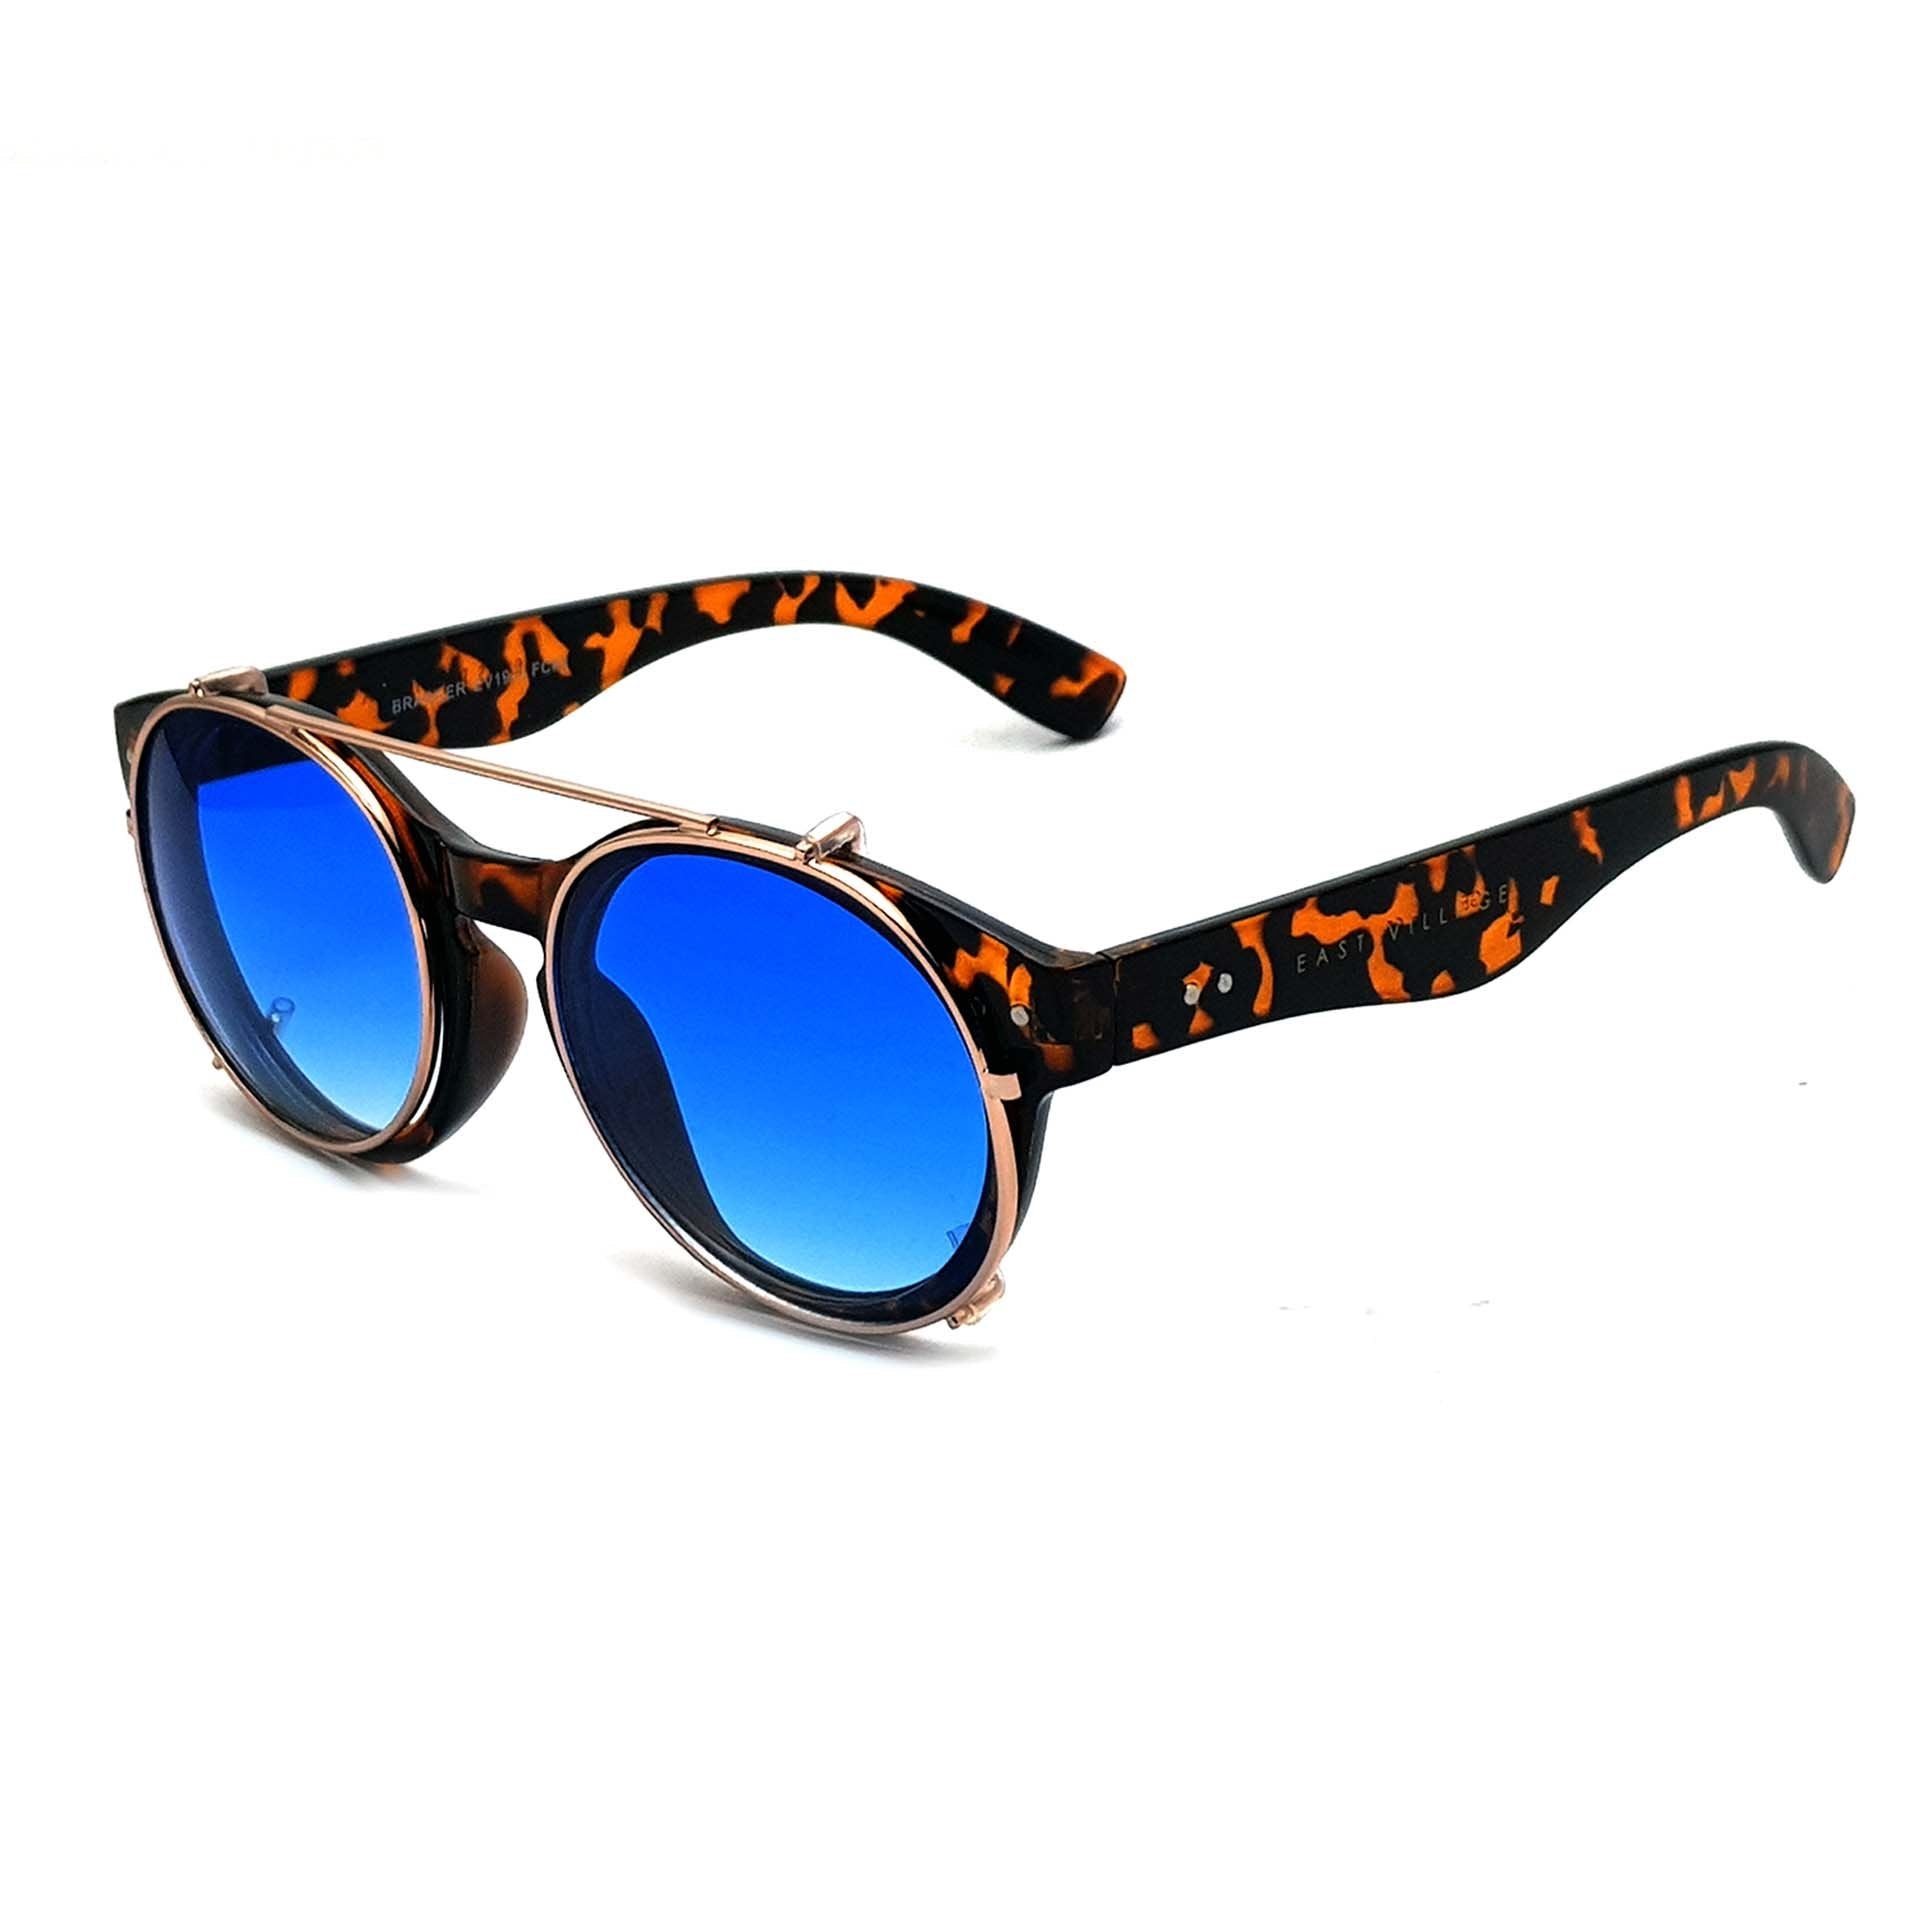 'Brawler' Round Sunglasses Tortoiseshell And Metal With Blue Lens